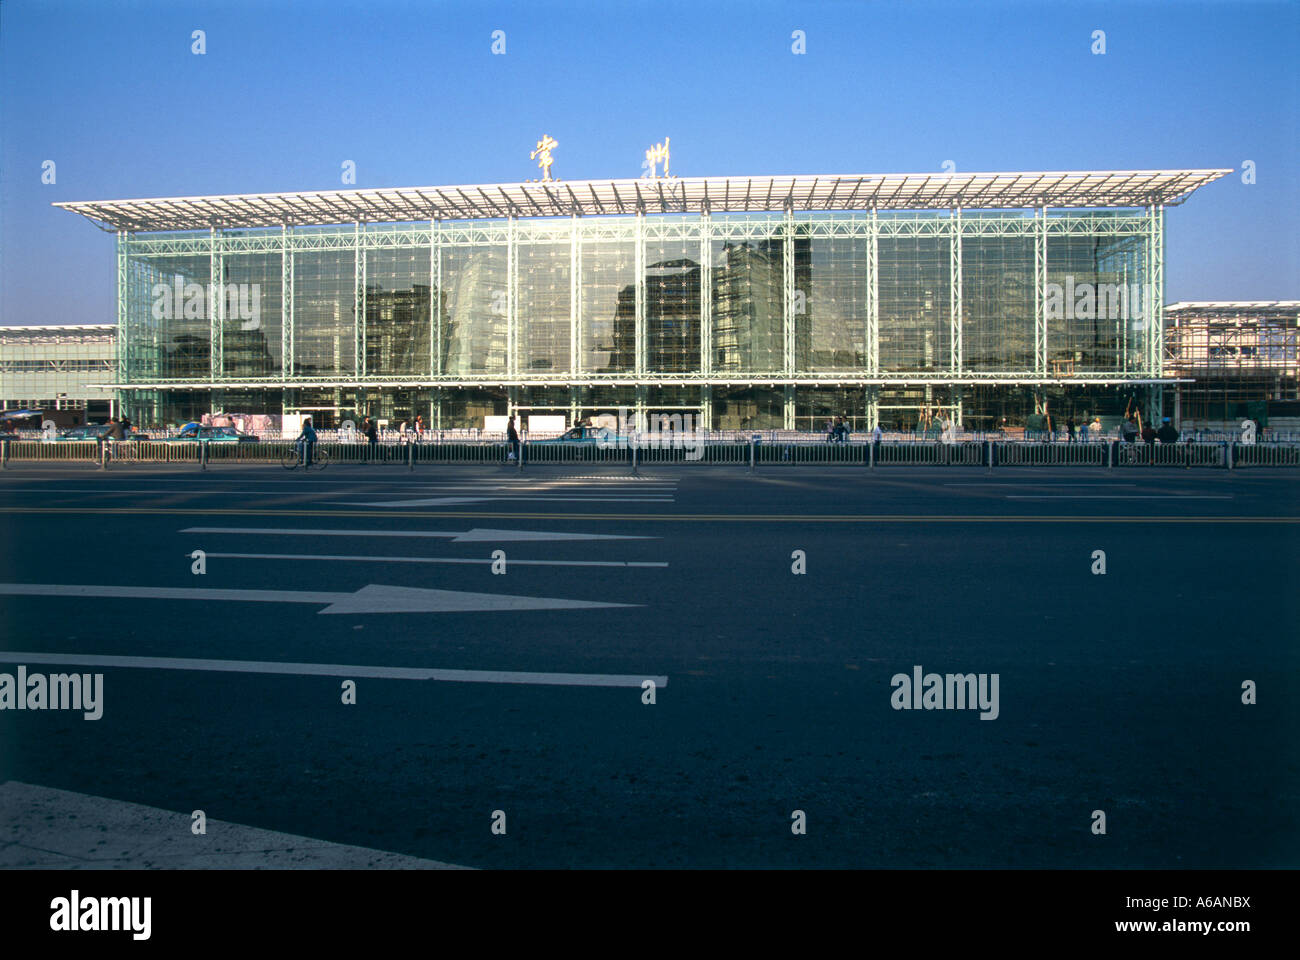 China, Jiangsu, Changzhou, modern glass and steel facade of railway station Stock Photo